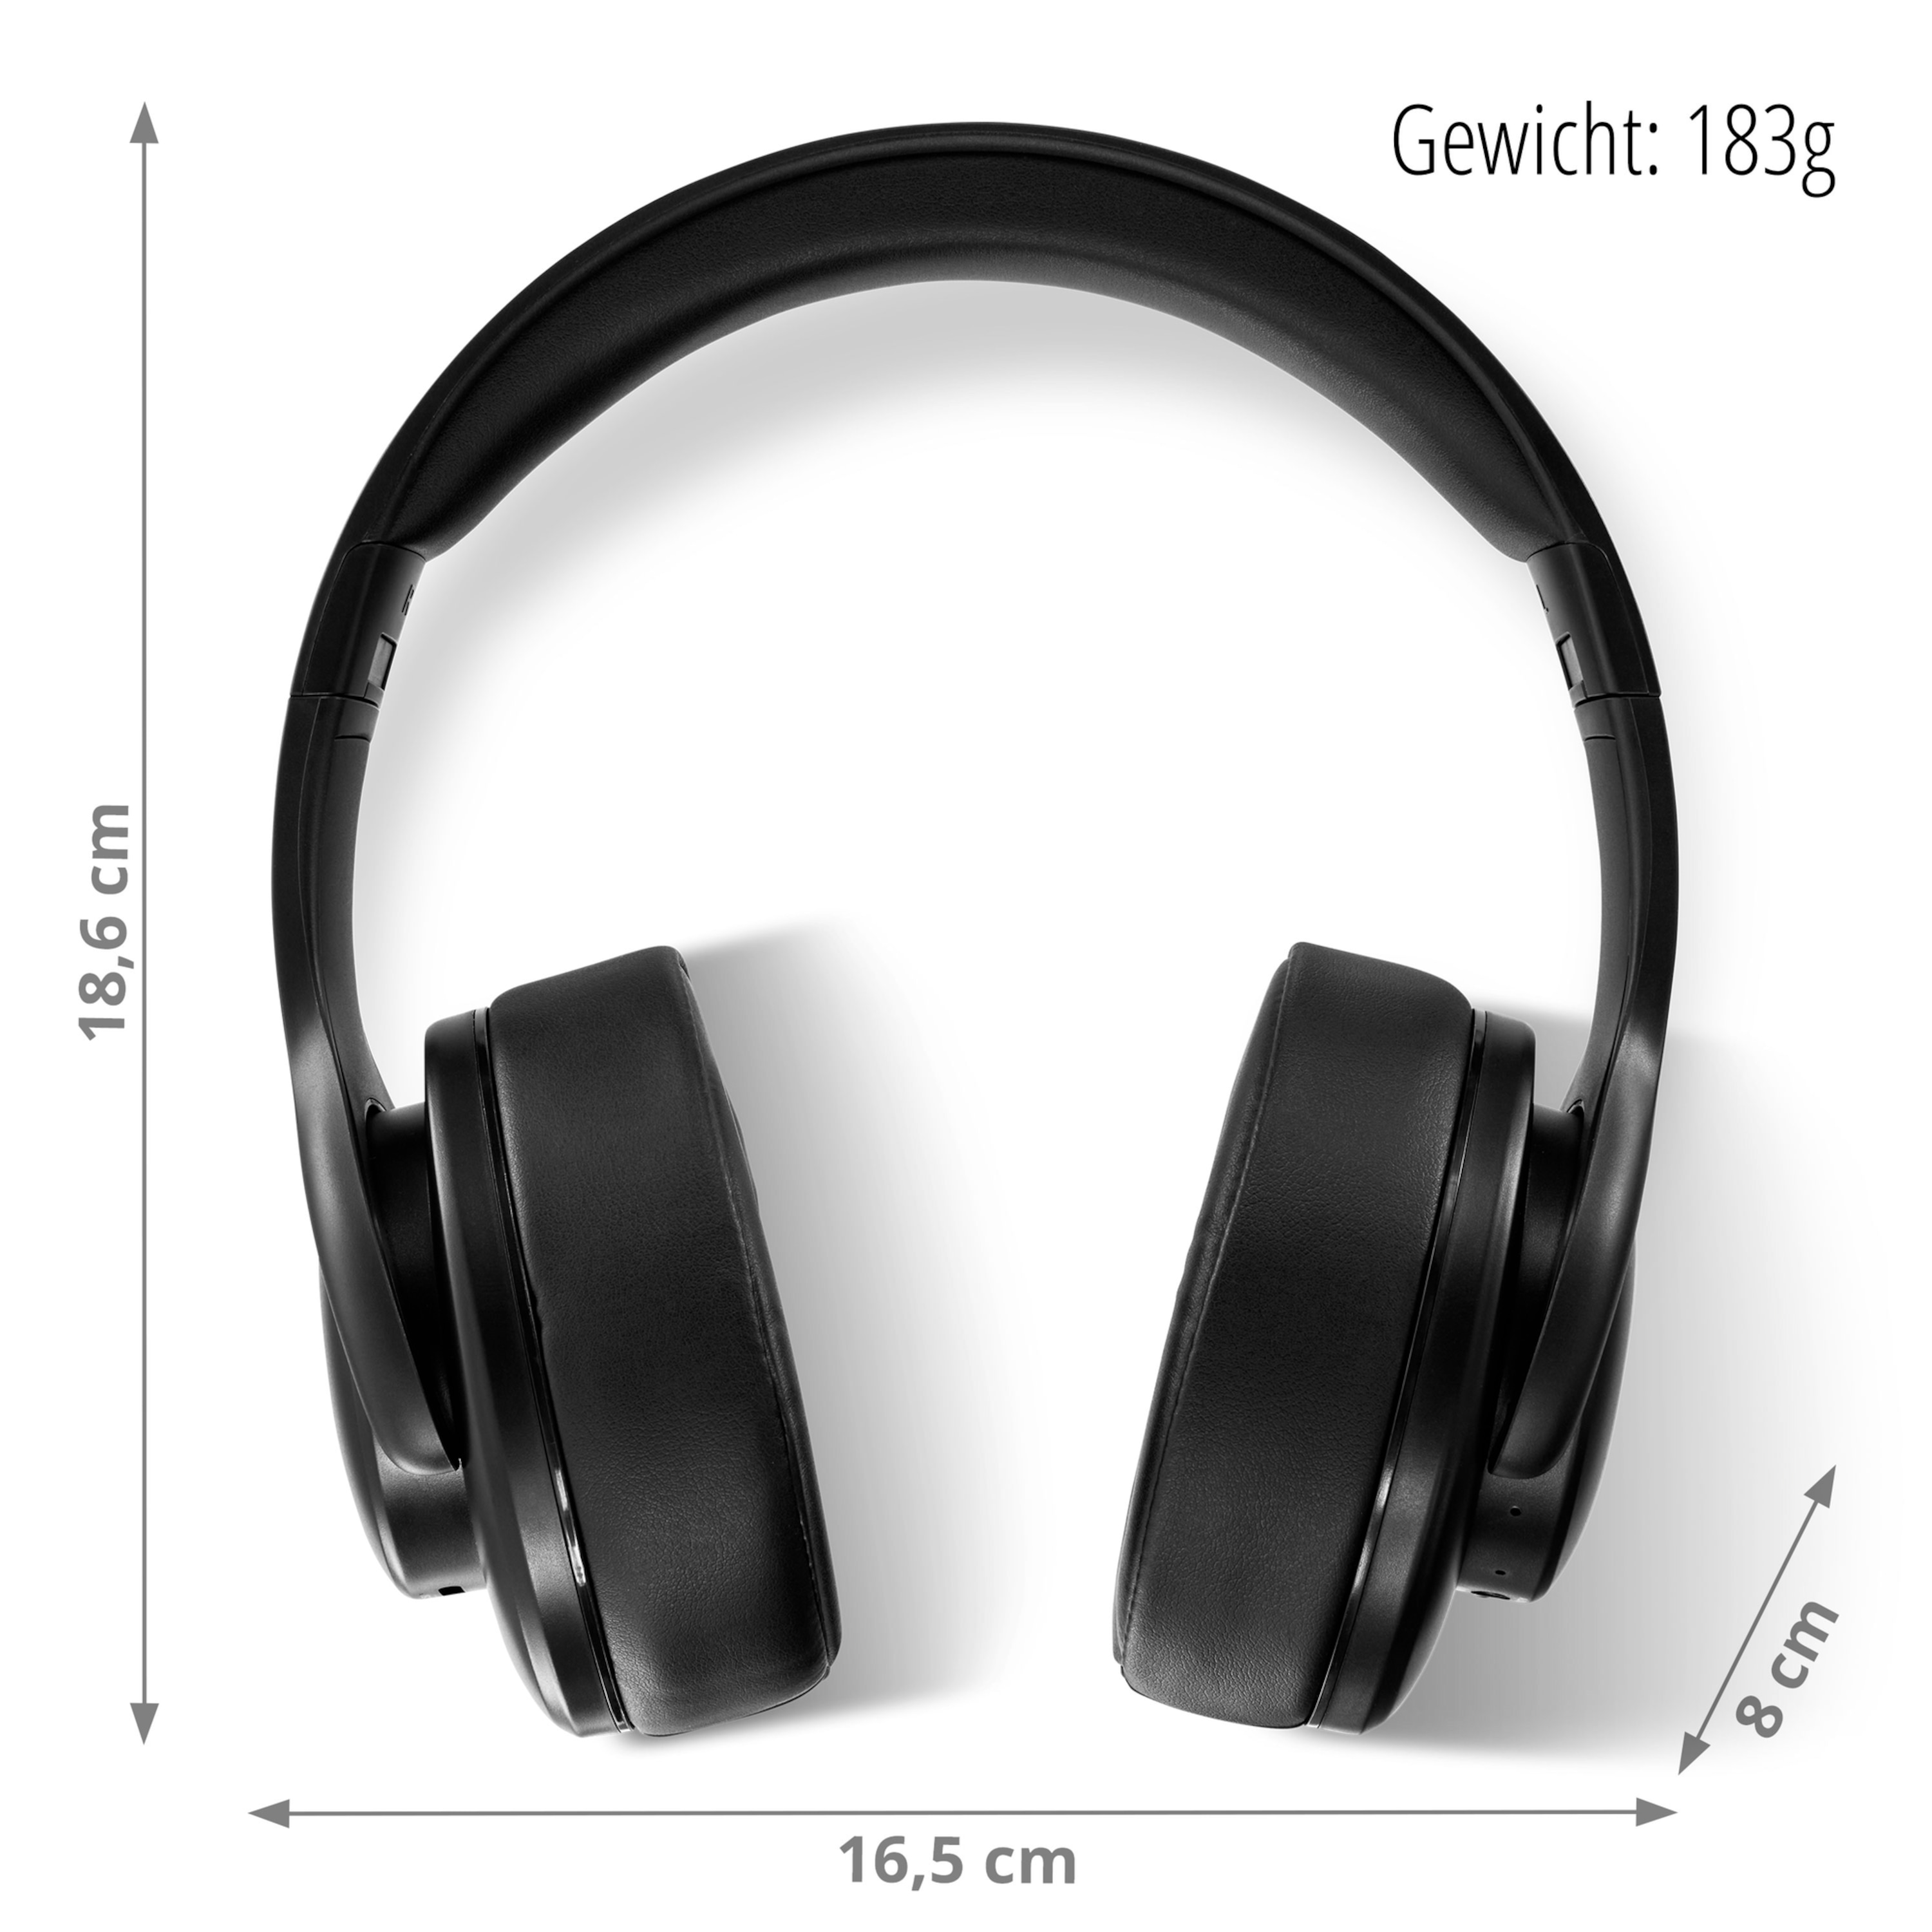 E62661, LIFE® schwarz MEDION Over-ear Kopfhörer